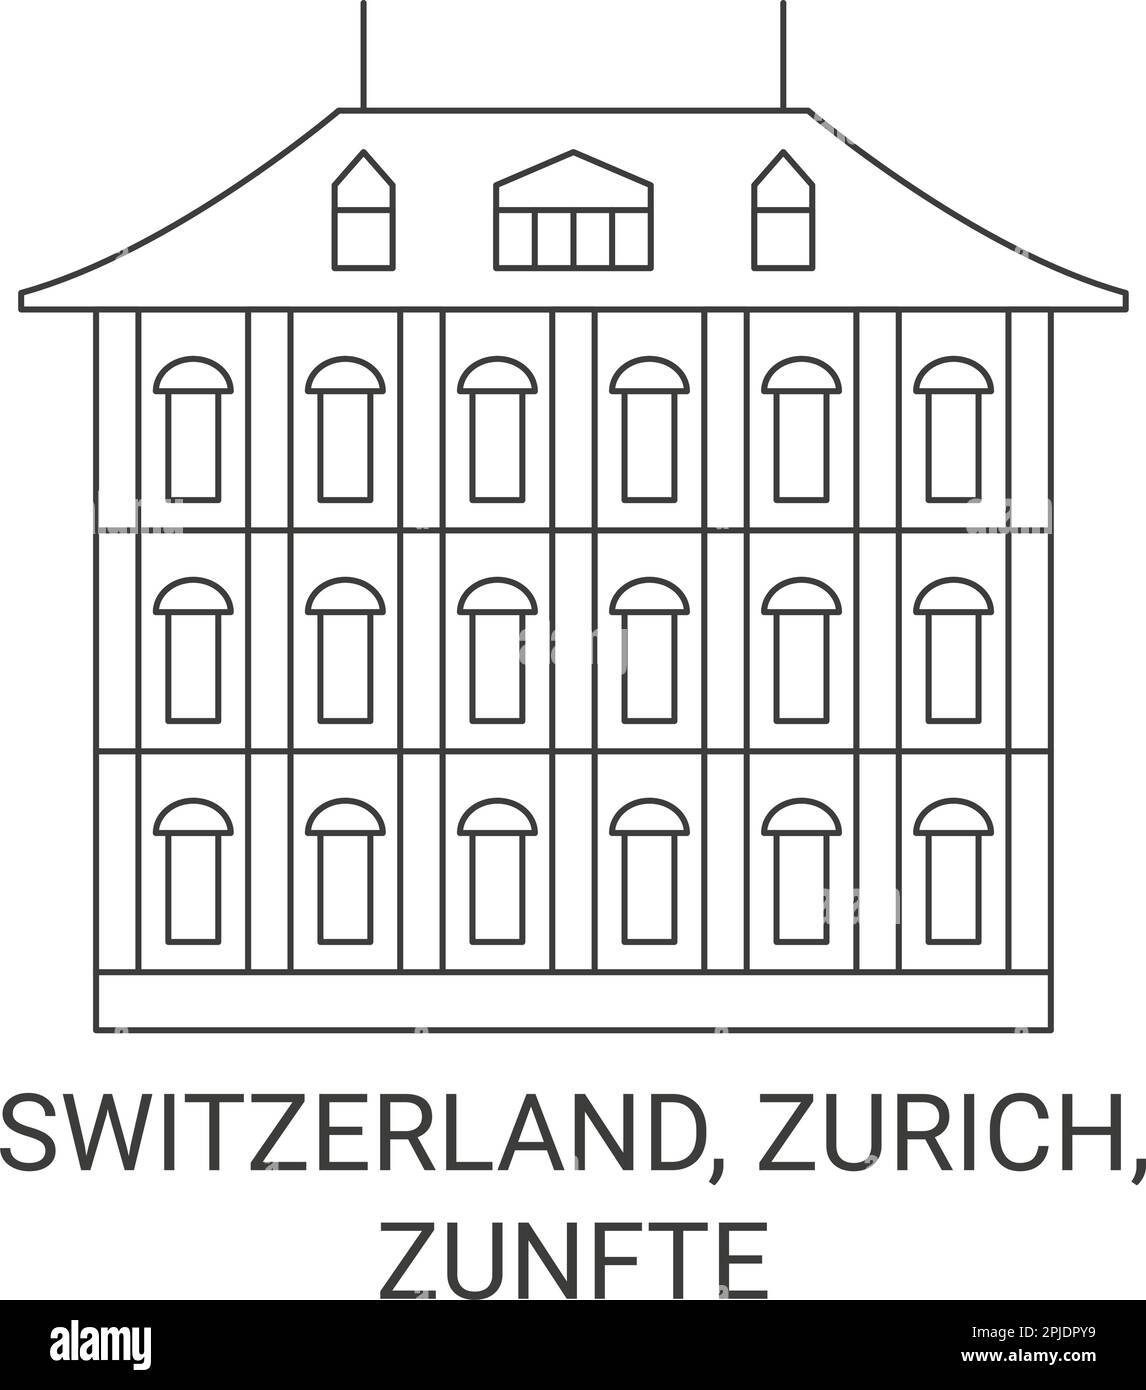 Suisse, Zurich, Zunfte illustration du vecteur de repère de voyage Illustration de Vecteur